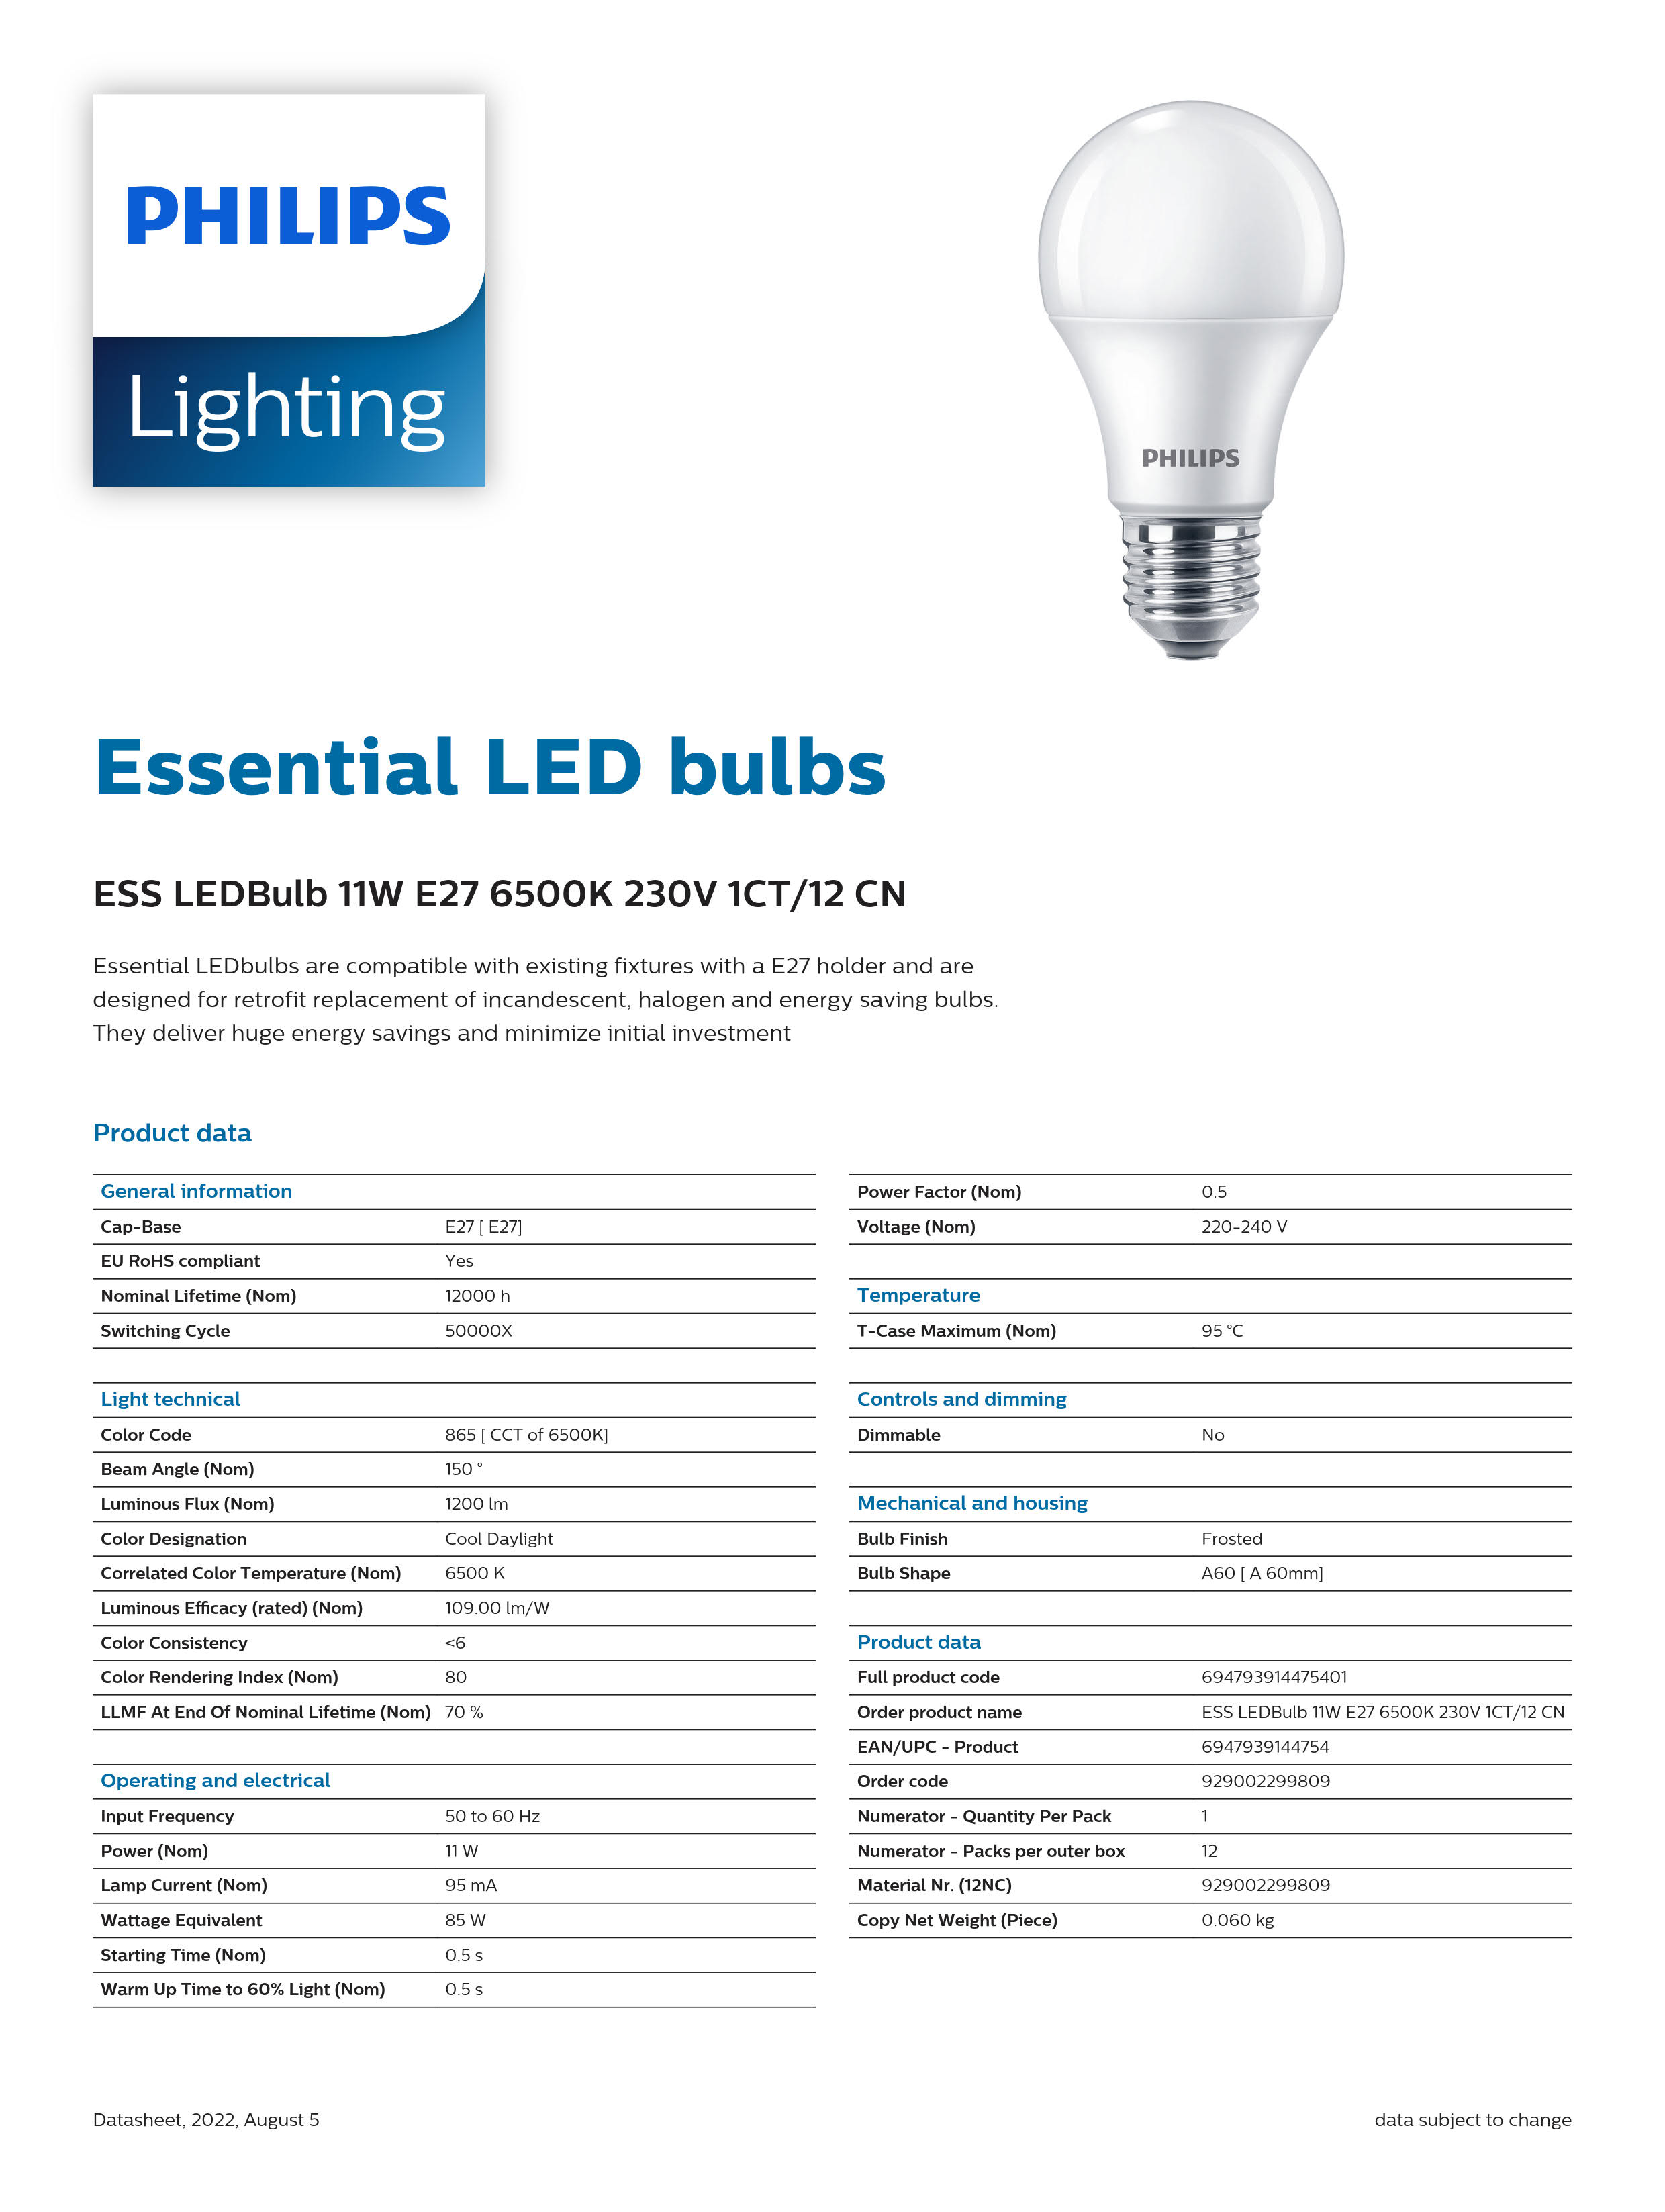 PHILIPS Essential LED bulbs 11W E27 6500K 230V 1CT/12 CN 929002299809